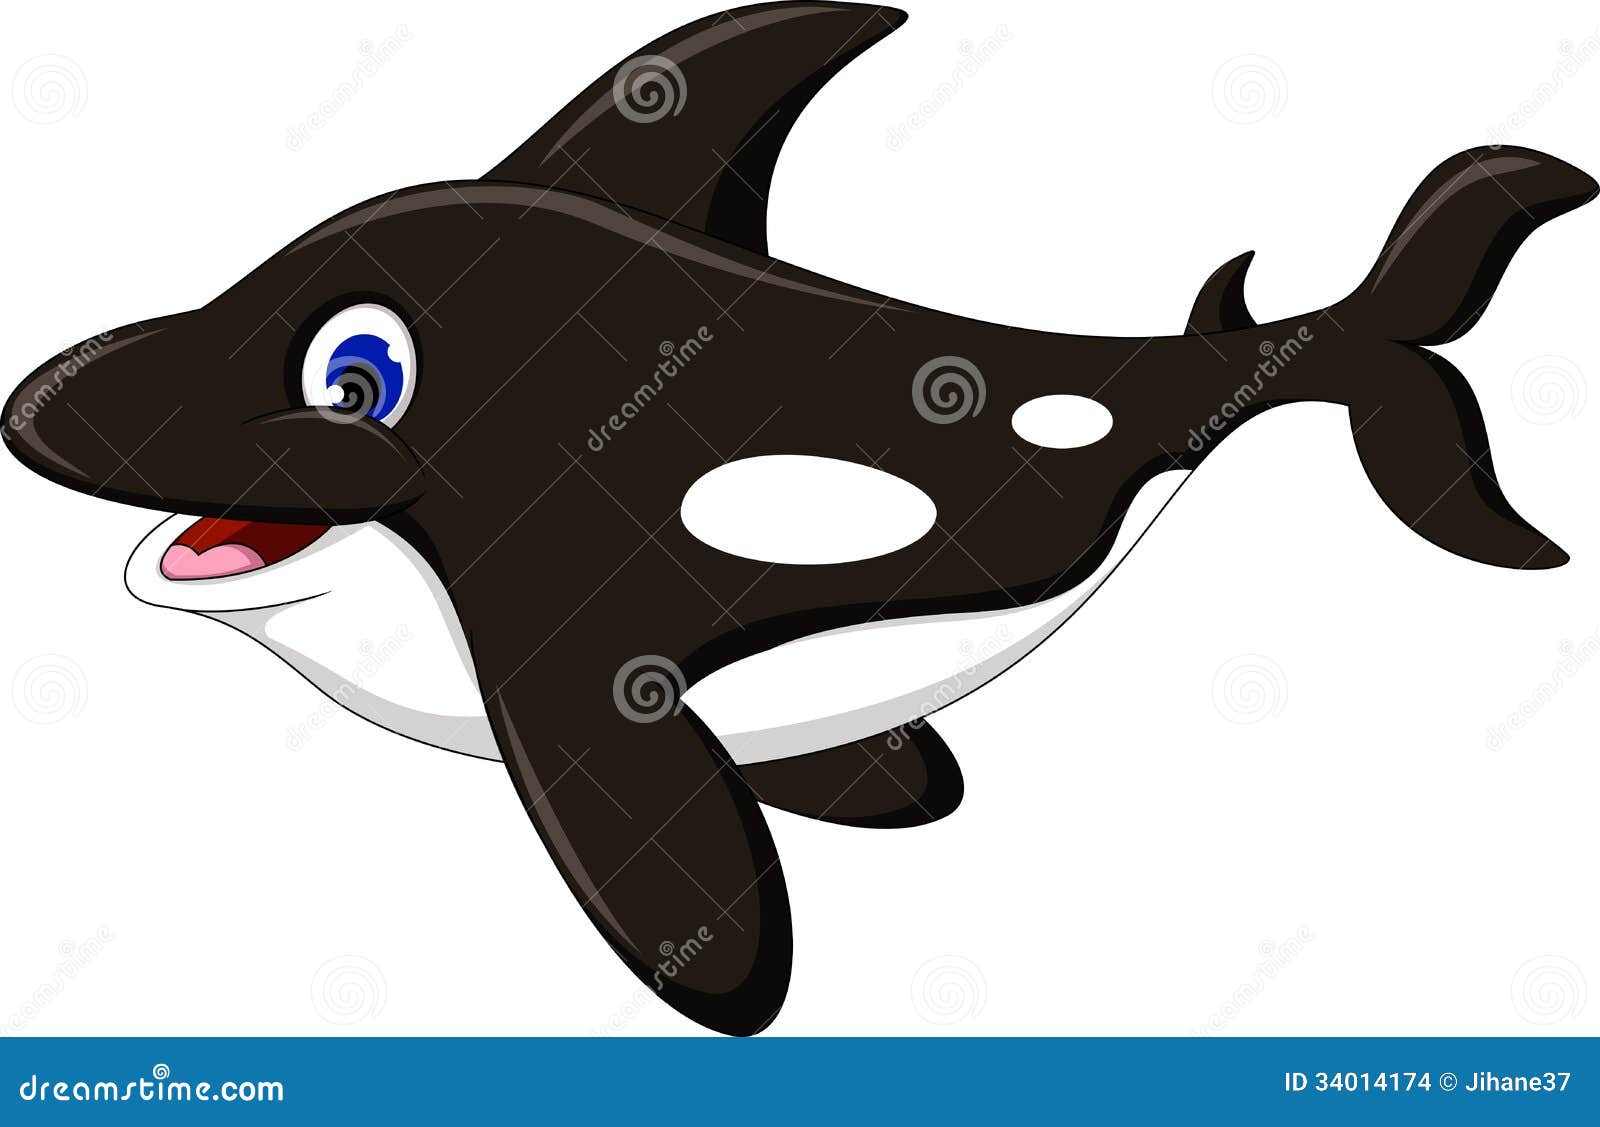 Killer Whale Cartoon Smiling Stock Illustration - Image: 34014174